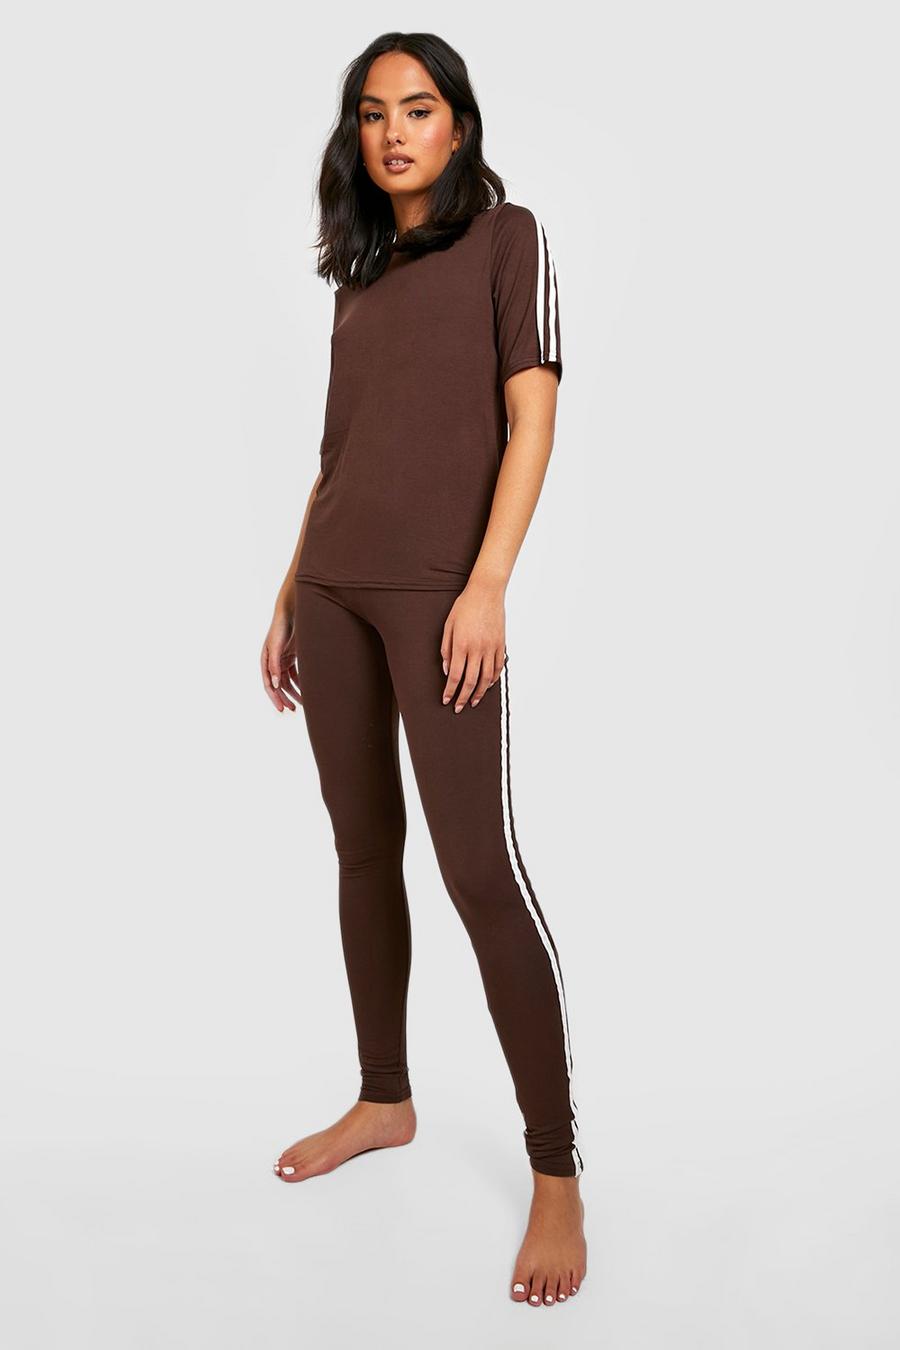 Chocolate brown Short Sleeve Side Stripe Loungewear Set